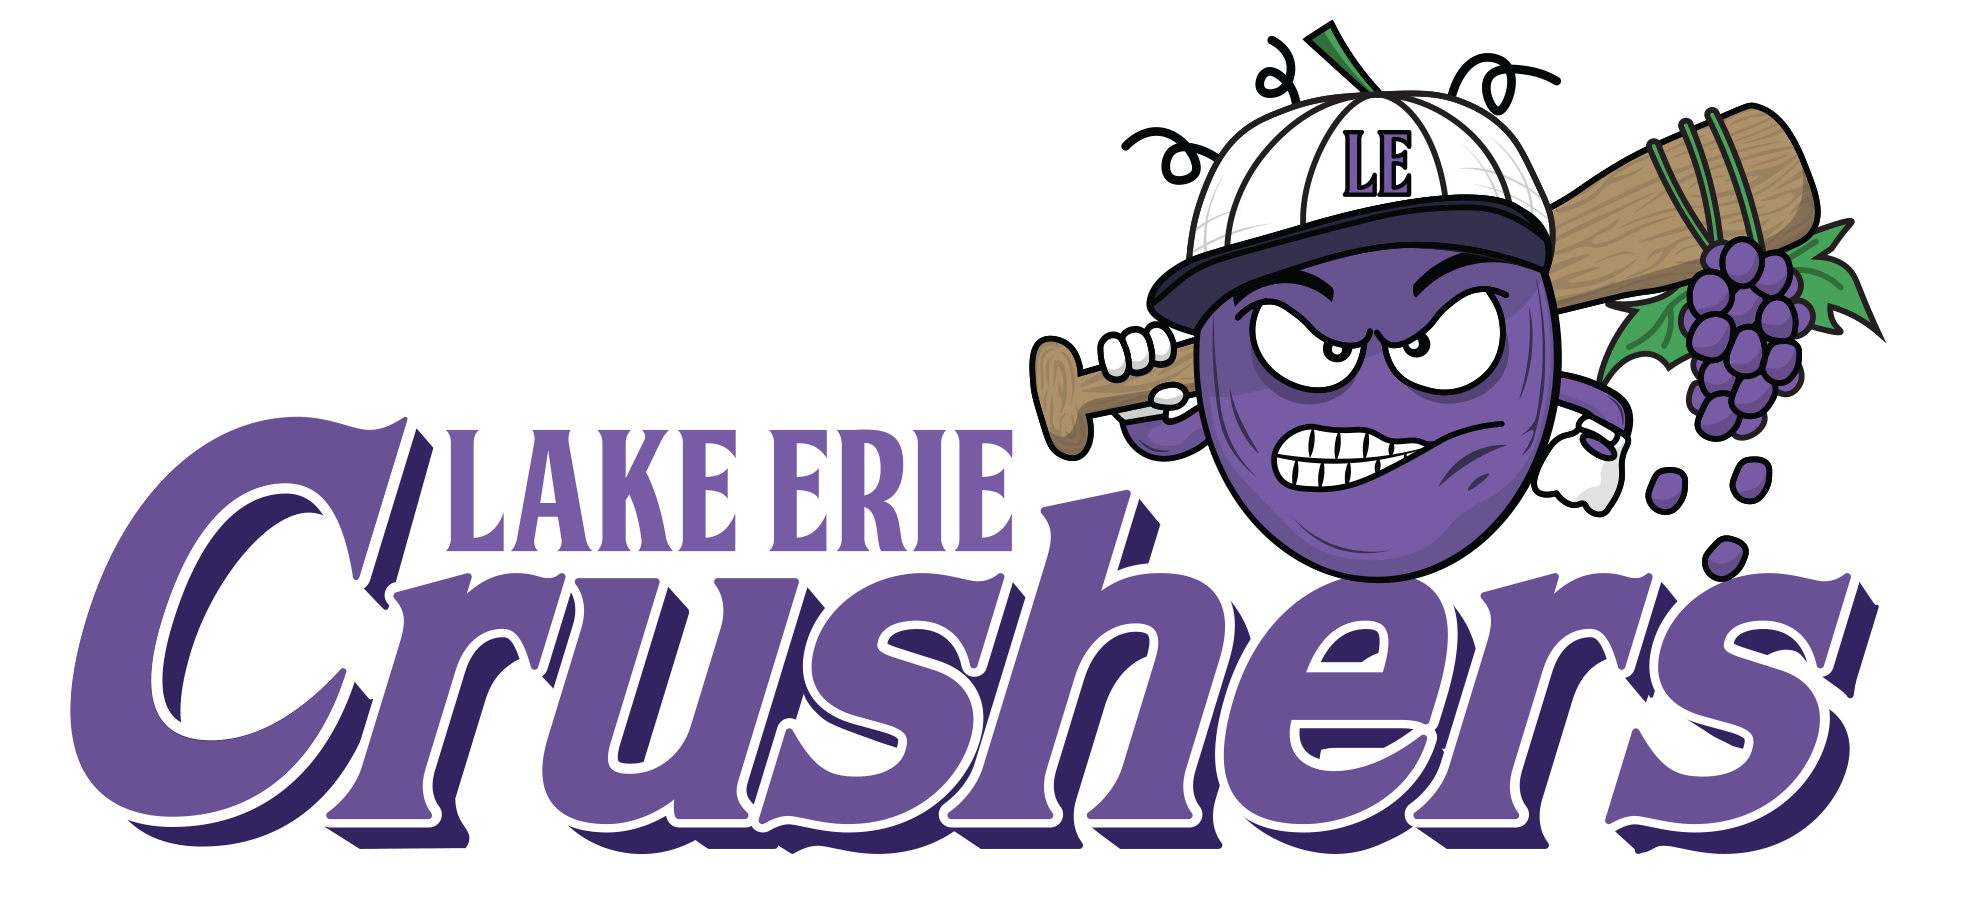 Crushers Logo - Lake Erie Crushers Unveil New Logo